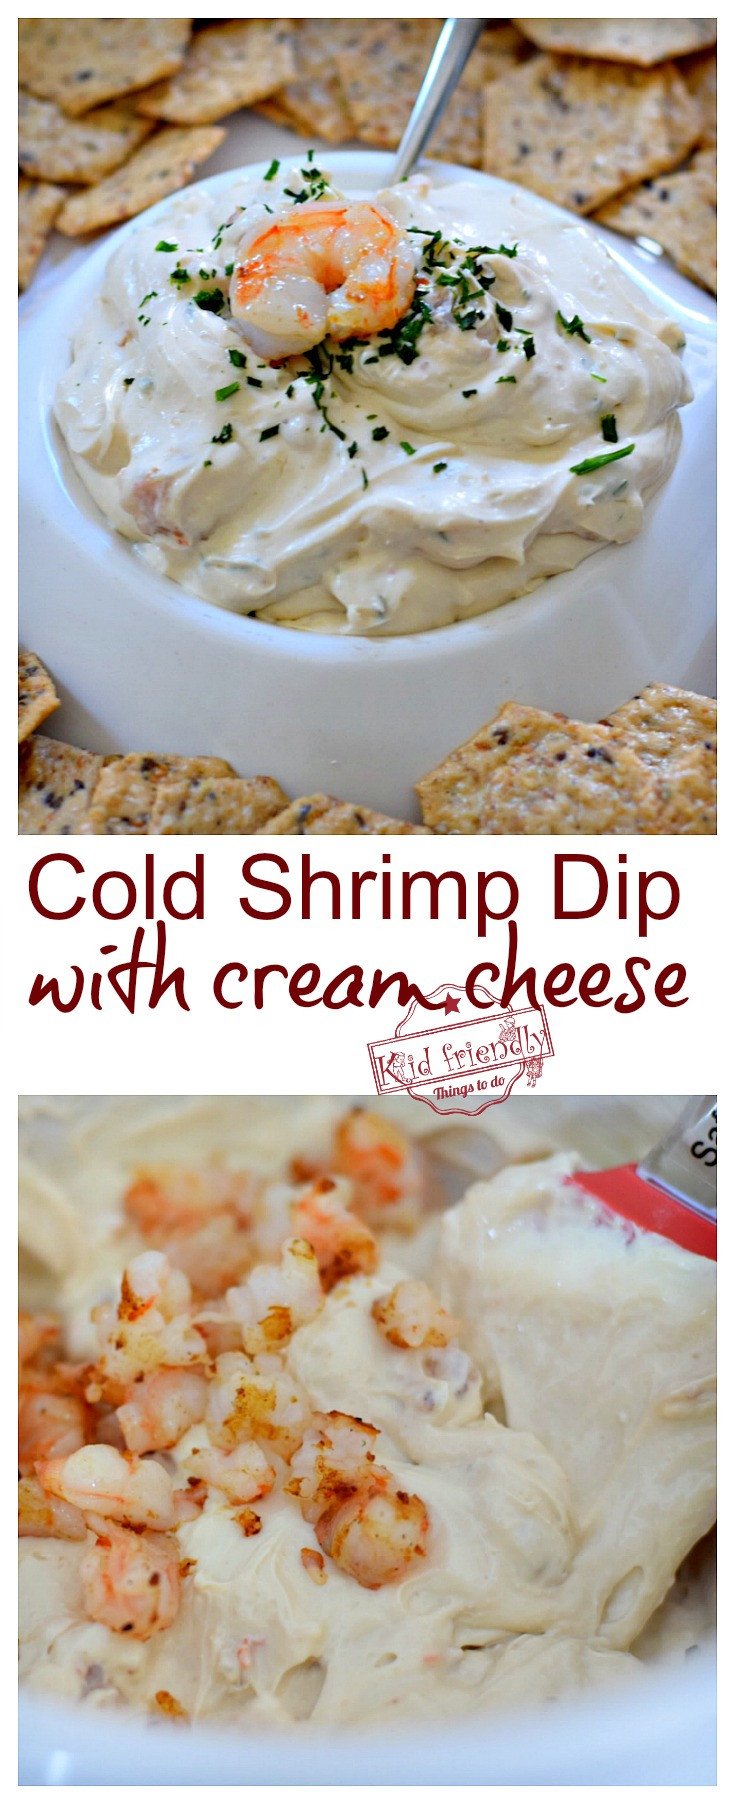 Shrimp Dip Appetizer
 The Best Cold Shrimp Dip Recipe With Cream Cheese